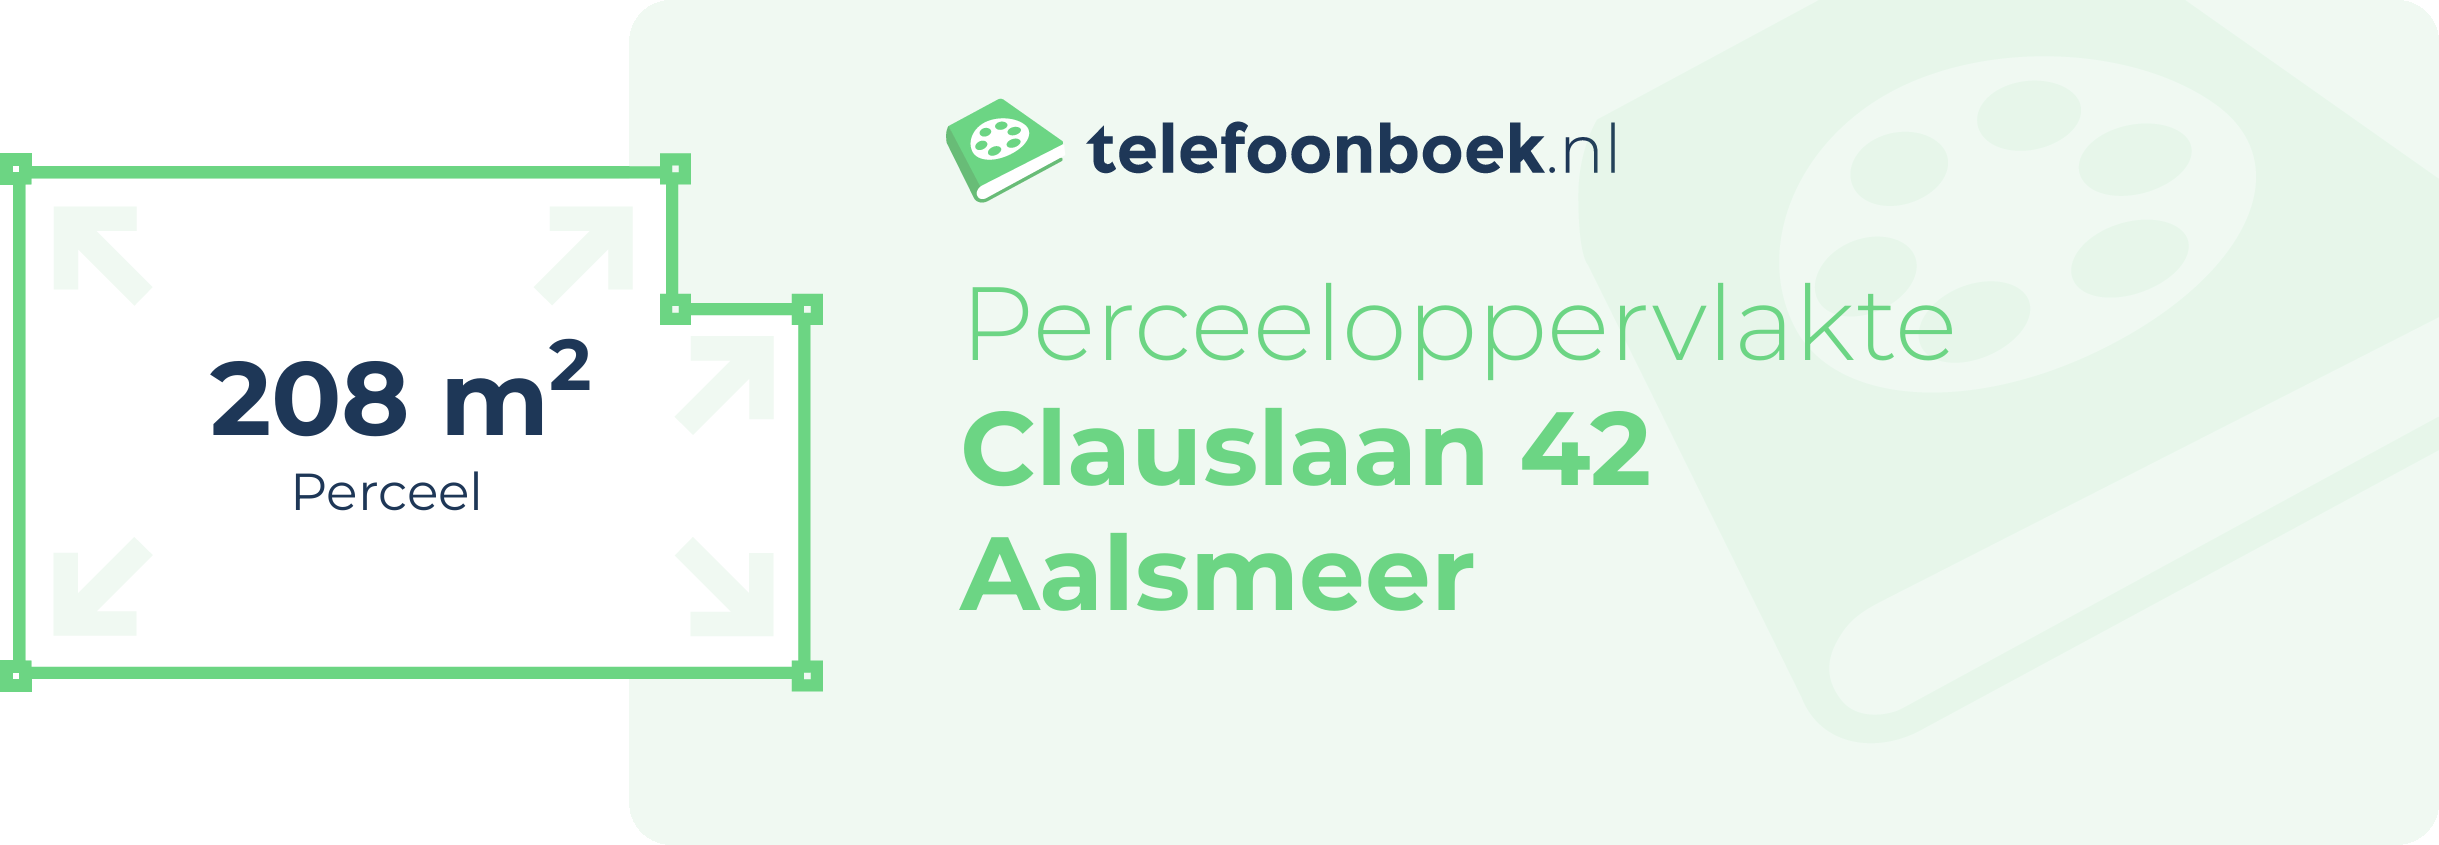 Perceeloppervlakte Clauslaan 42 Aalsmeer